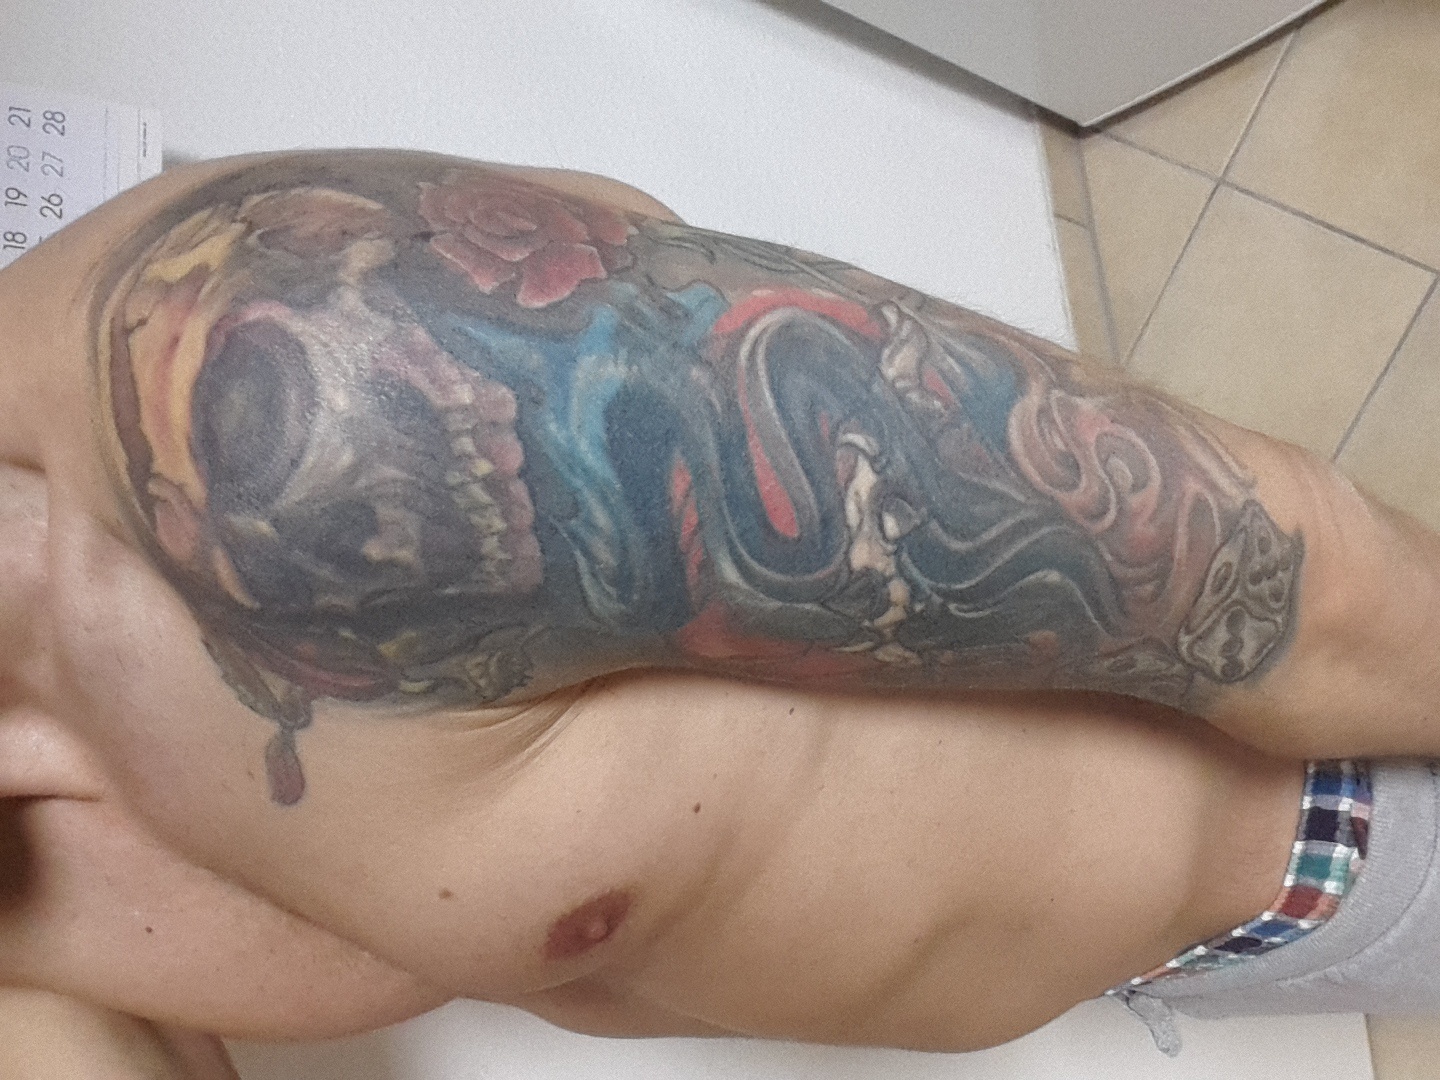 pavel_bln: Suche Cover Up Tattoo Spezi im Berlin